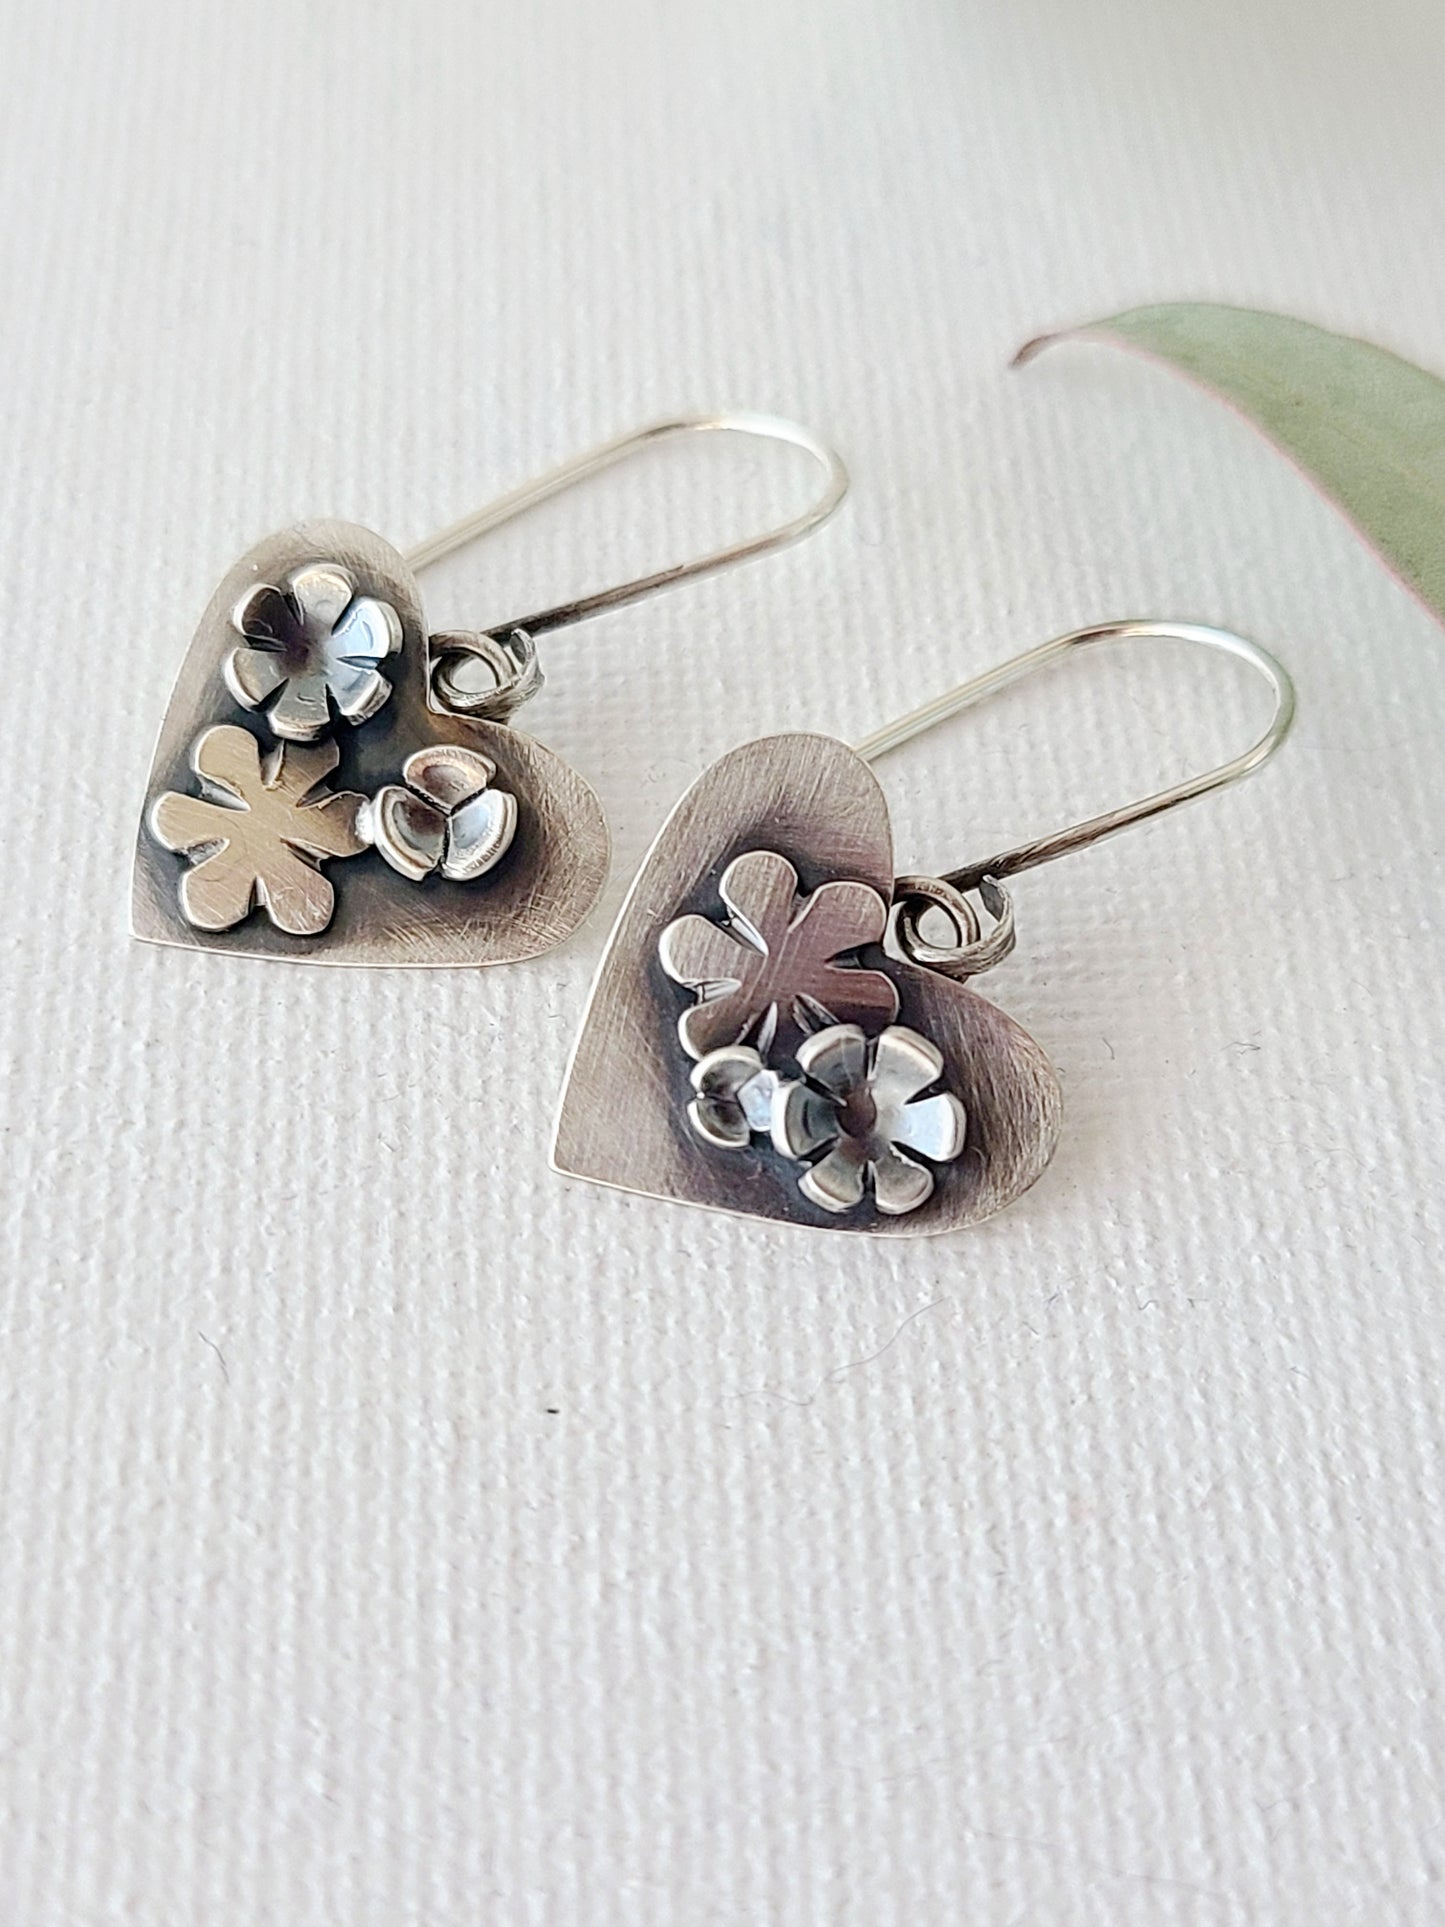 Mini Hearts and Flowers earrings